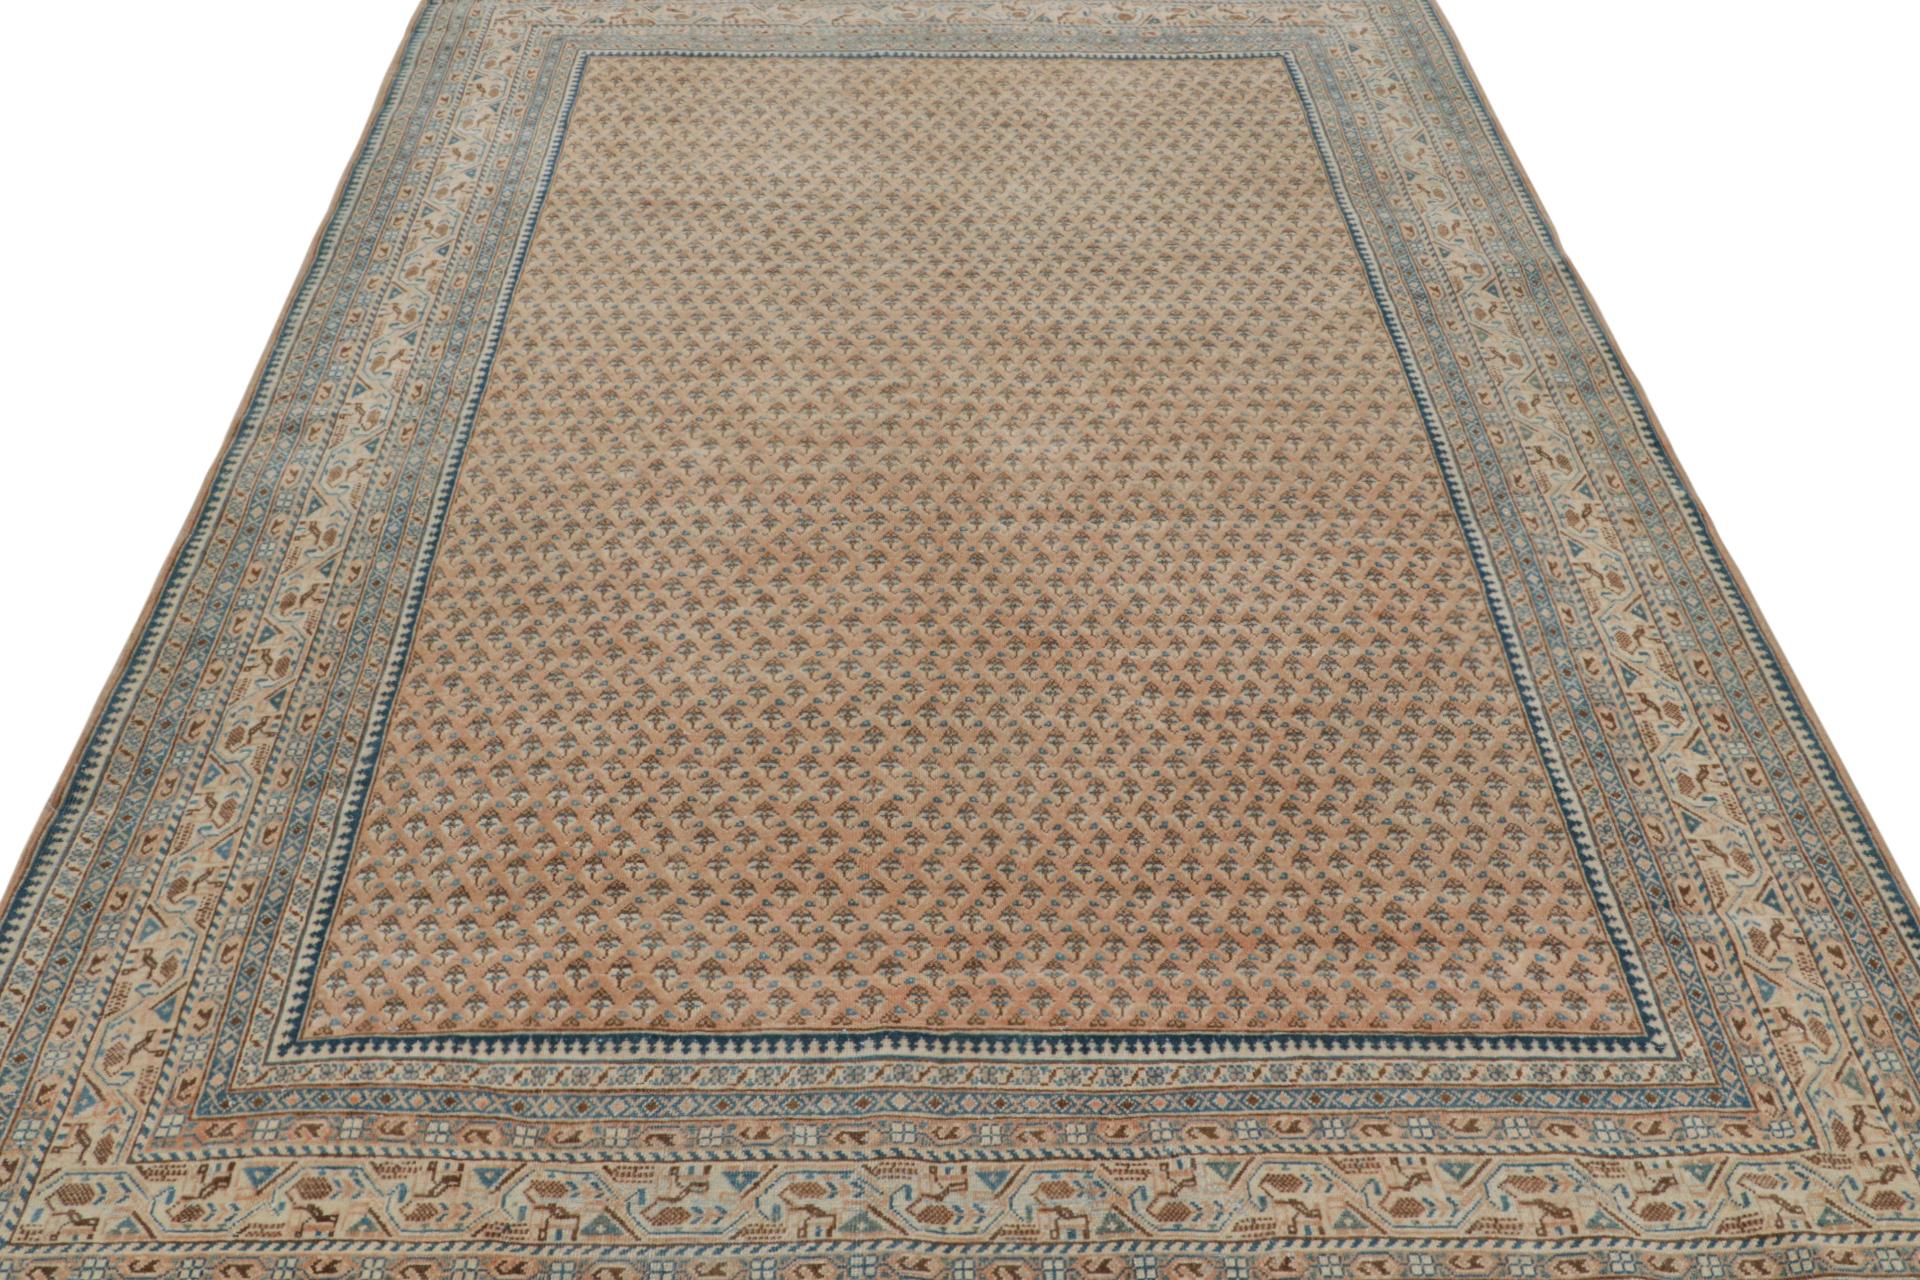 Tribal Vintage Indian rug in Beige-Brown and Blue Patterns by Rug & Kilim For Sale